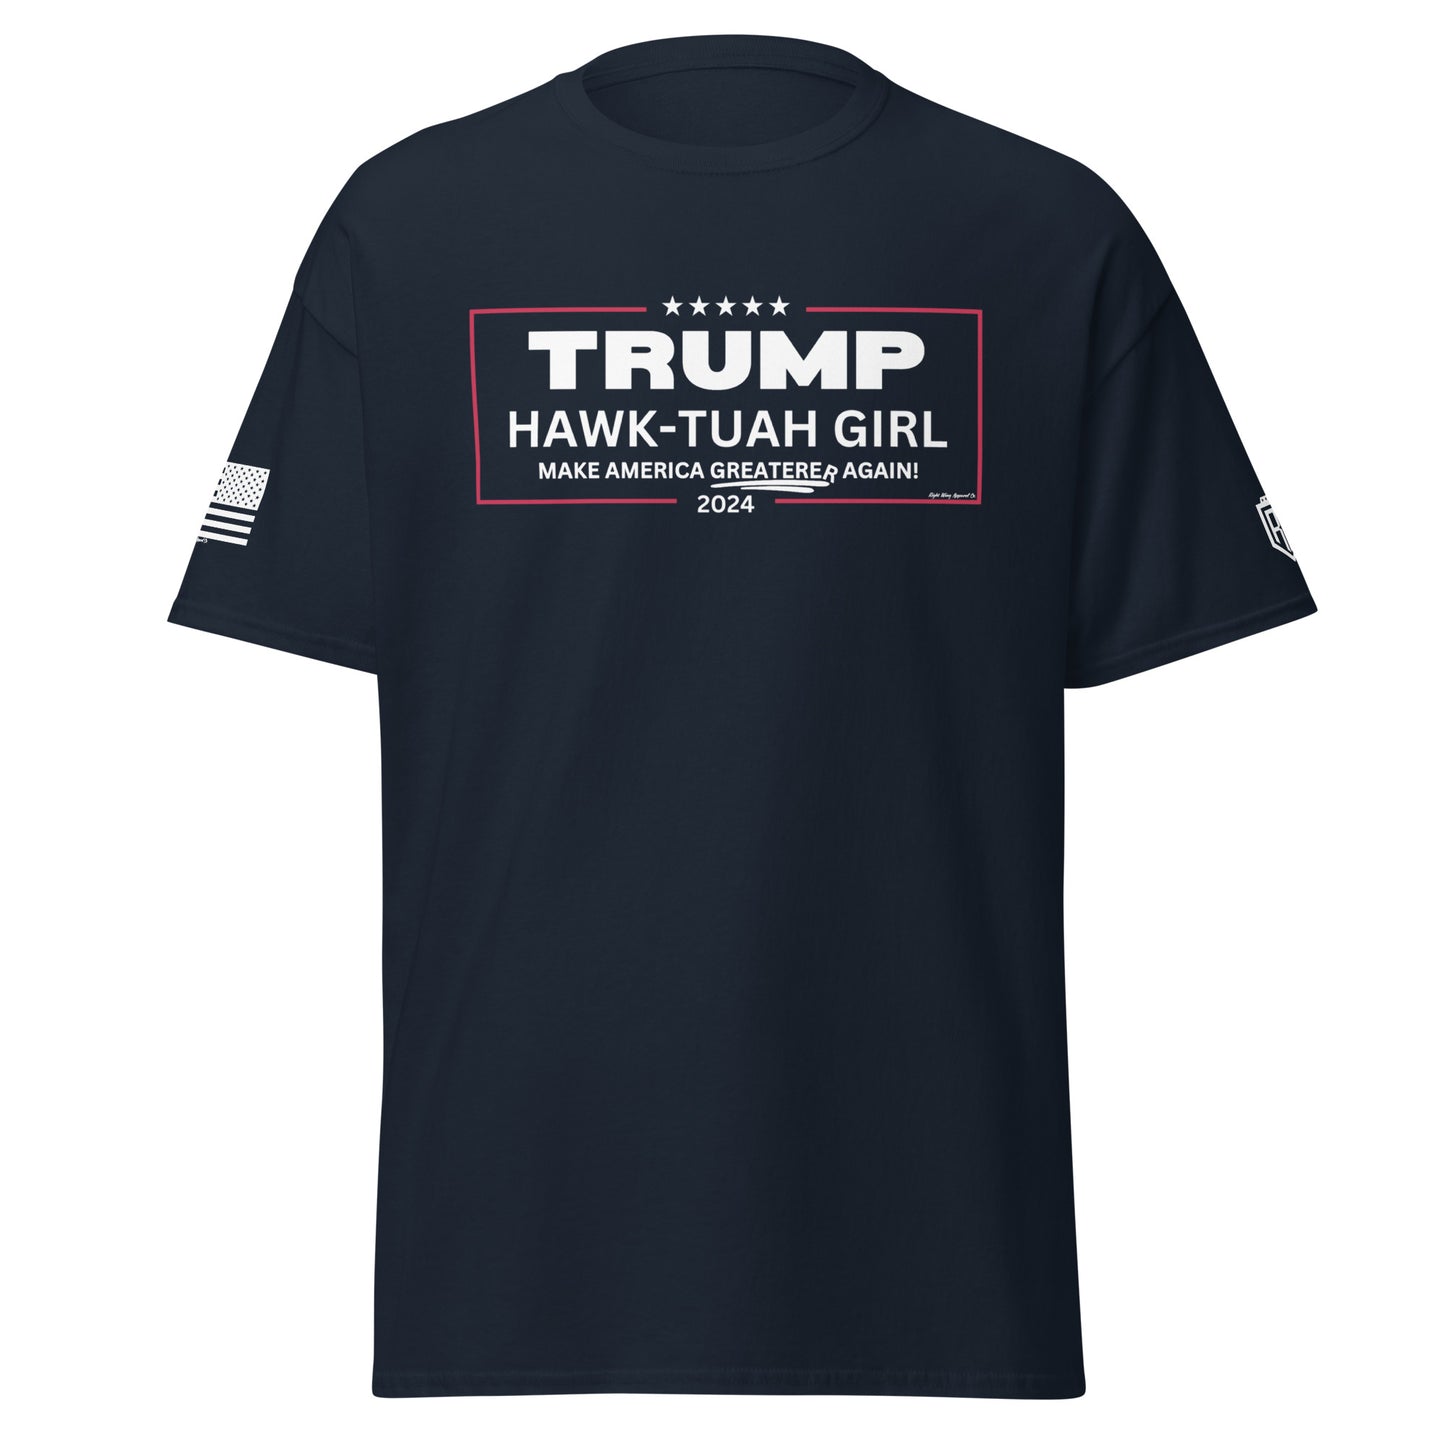 Trump Hawk-Tuah Girl "Make America Greaterer Again!" Campaign T-Shirt